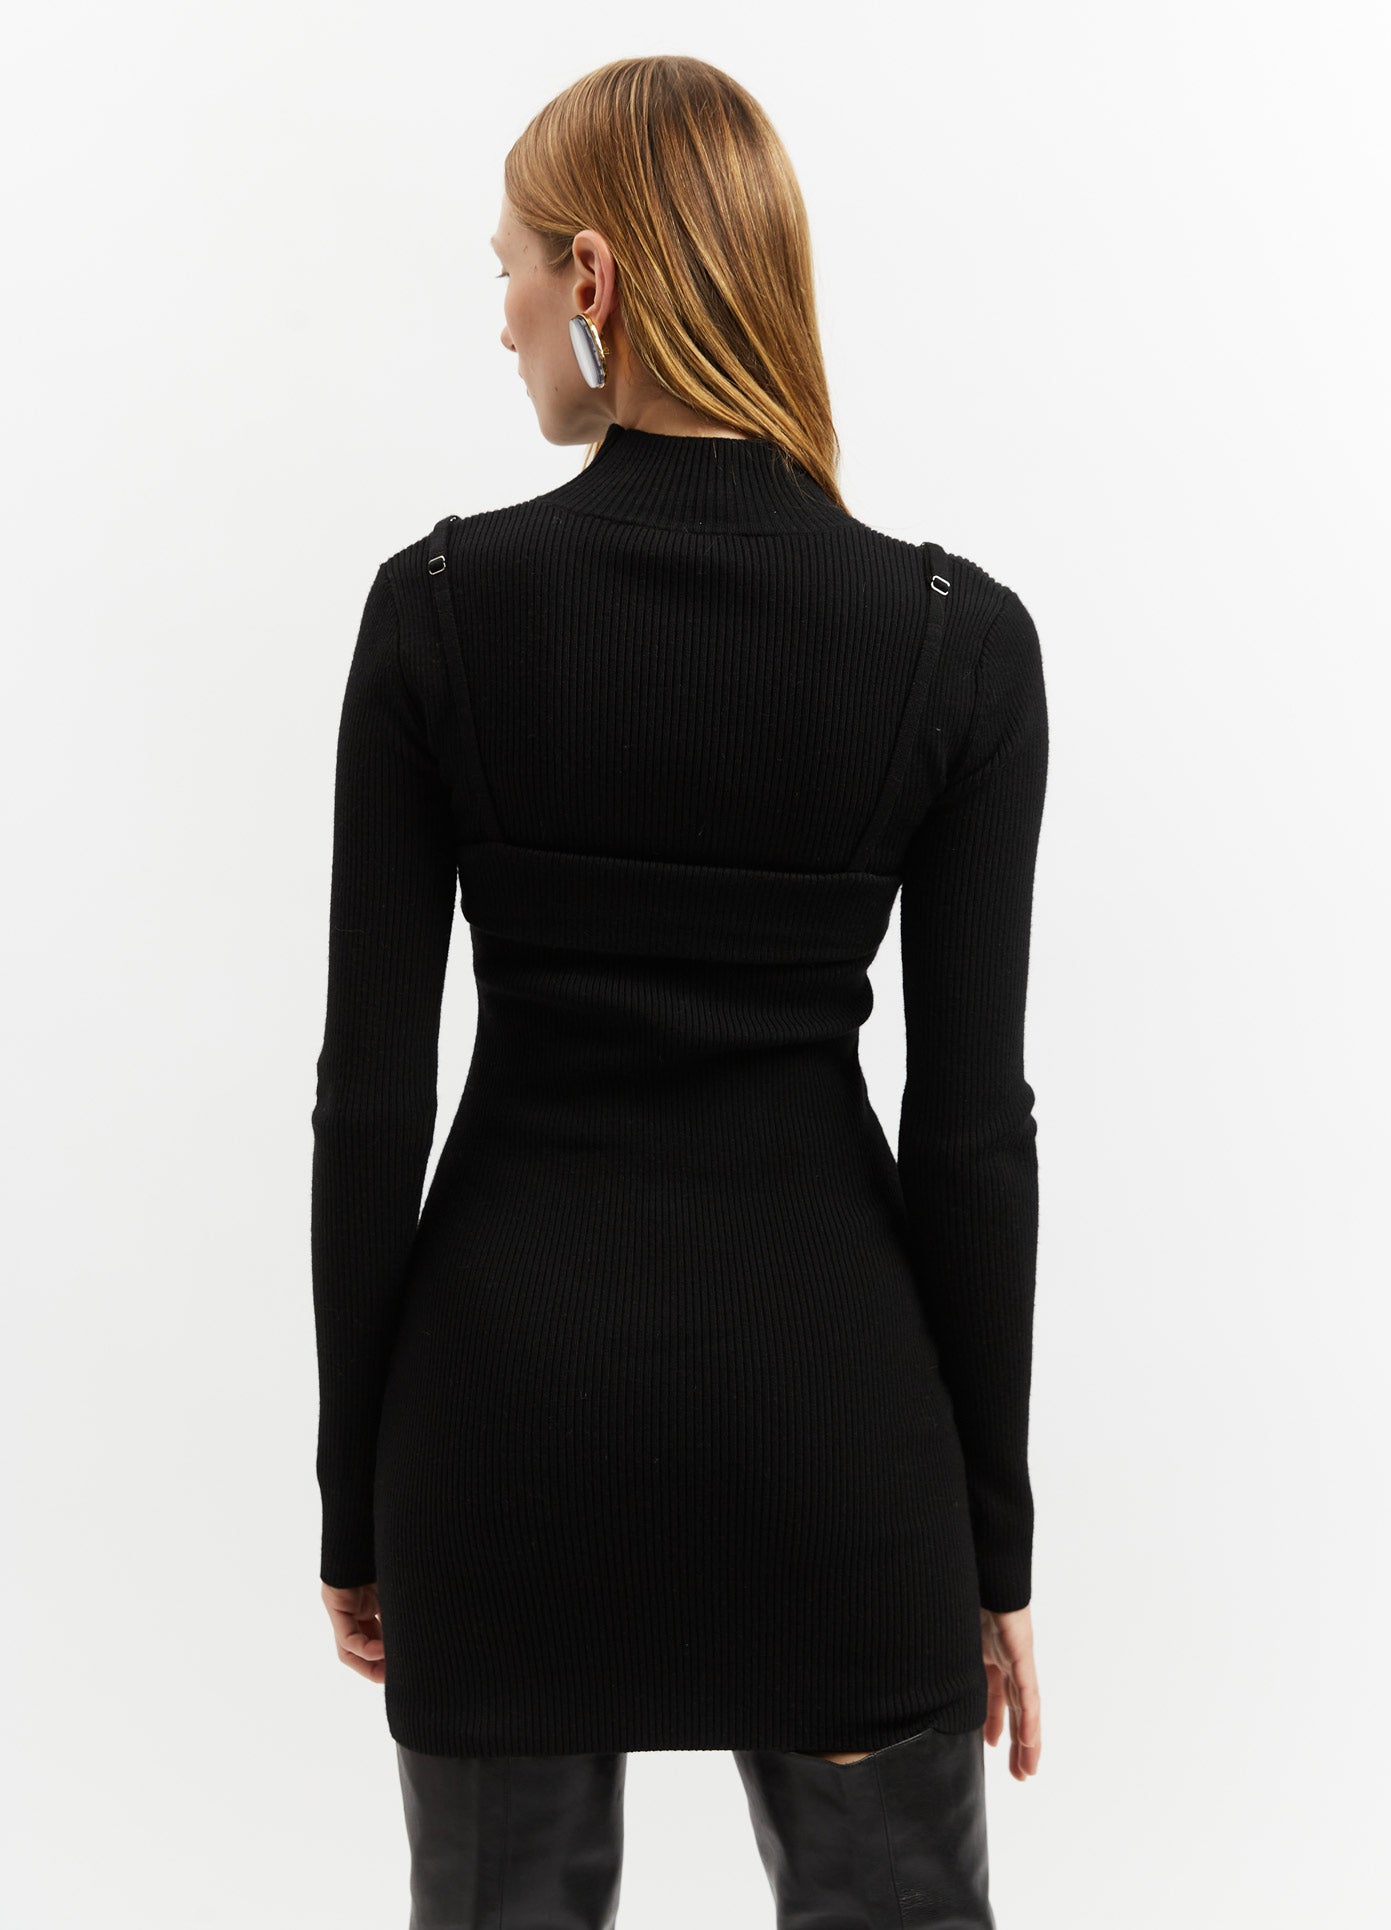 MONSE Bra Short Knit Dress in Black on Model Back View